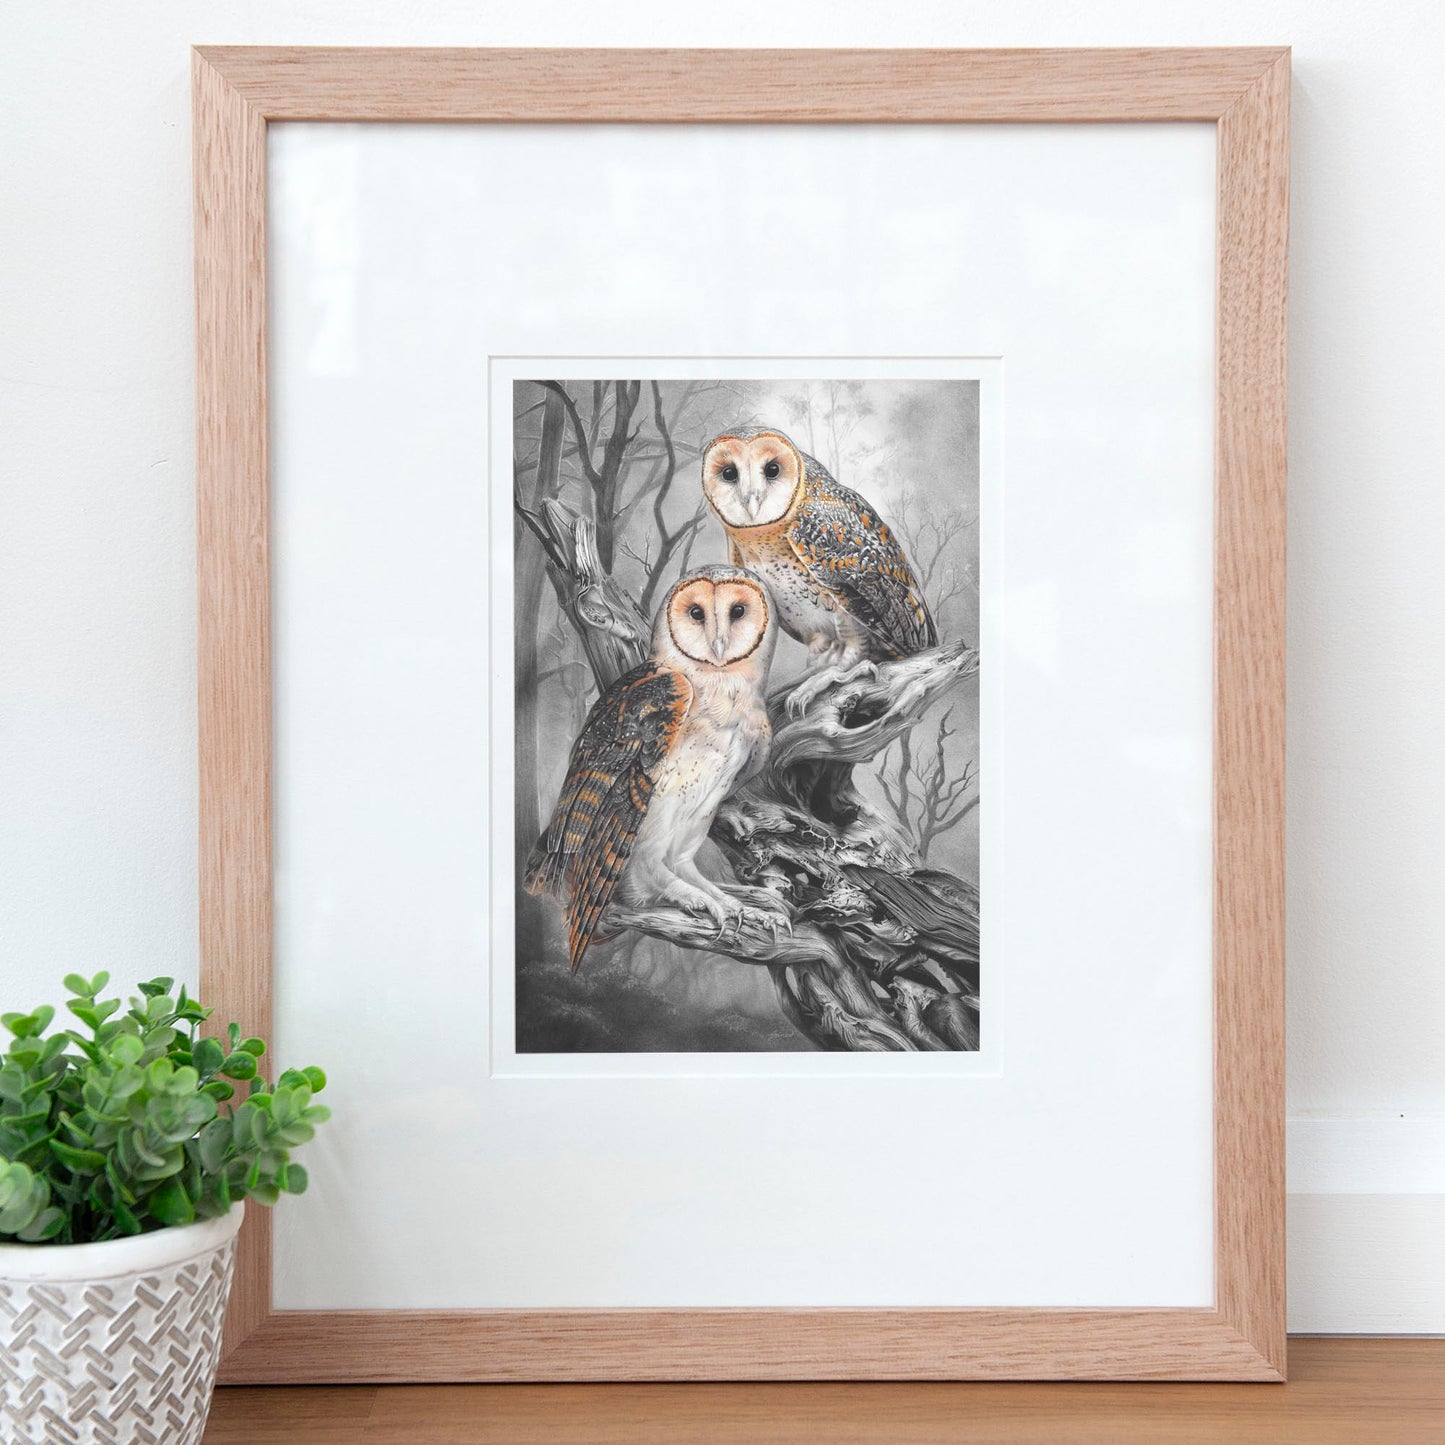 'Tasmanian Masked Owls' art print